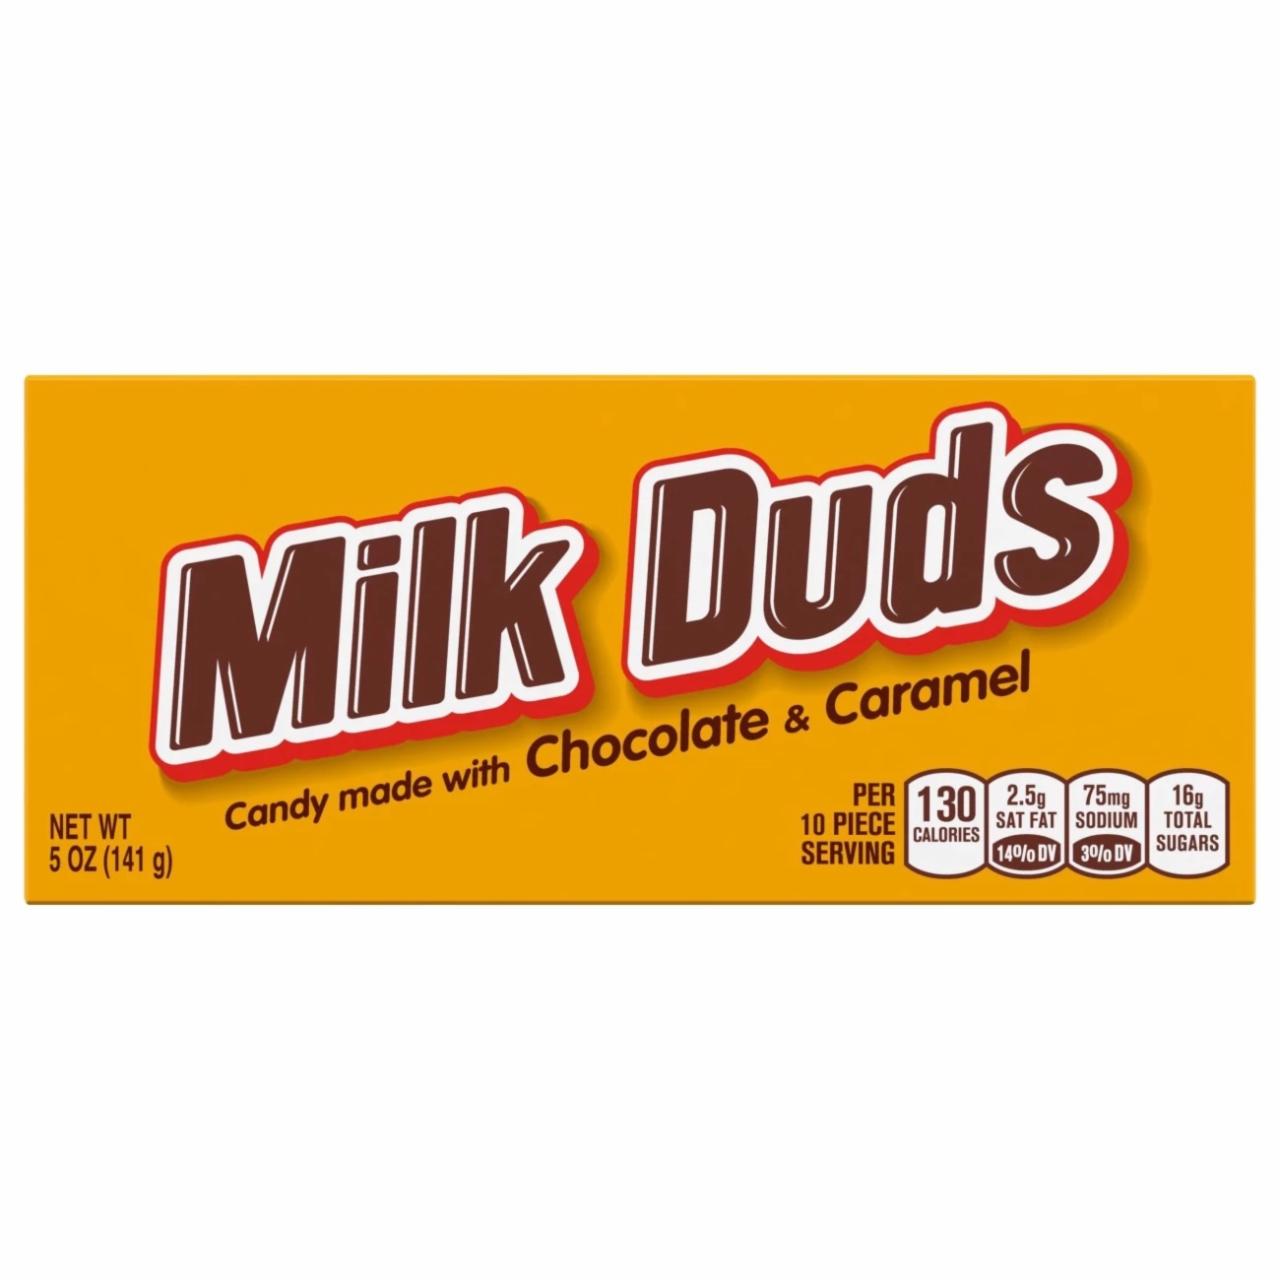 Fotografie - Milk Duds Chocolate & Caramel candy